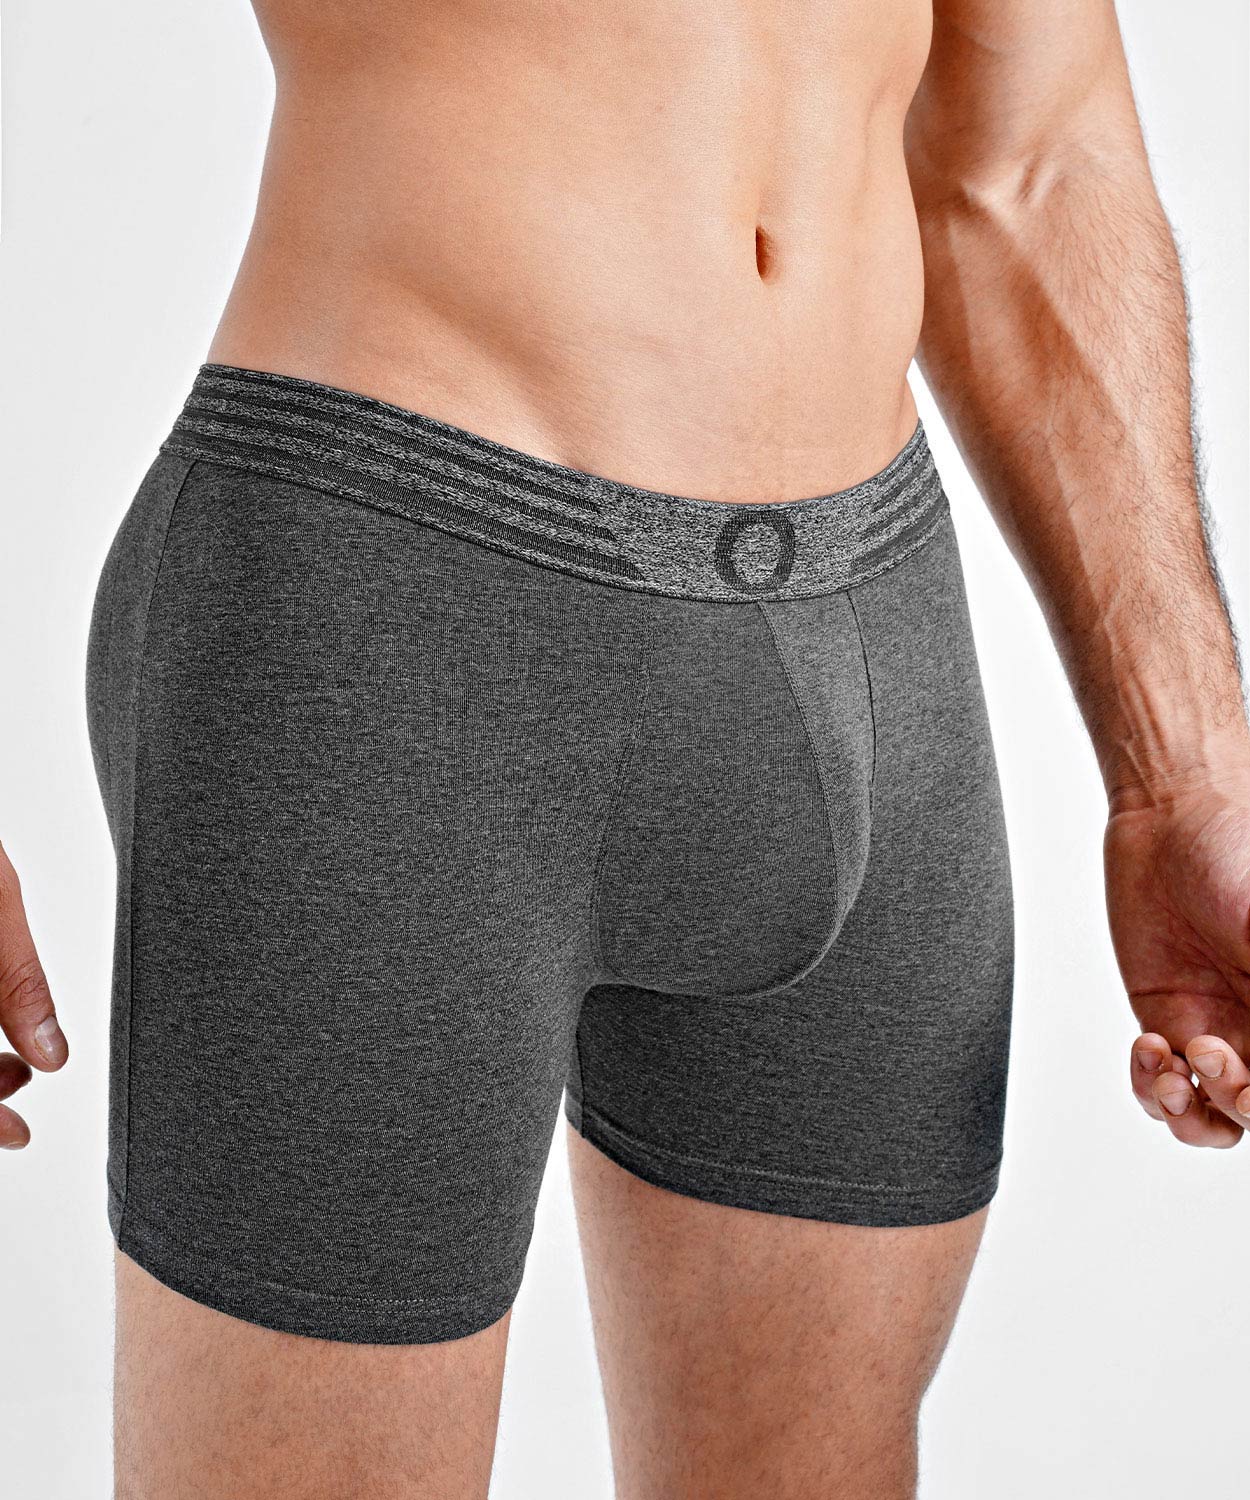 Men's Molded Padded Butt Booster Enhancer Boxer Brief Boyshort Underwear  8108